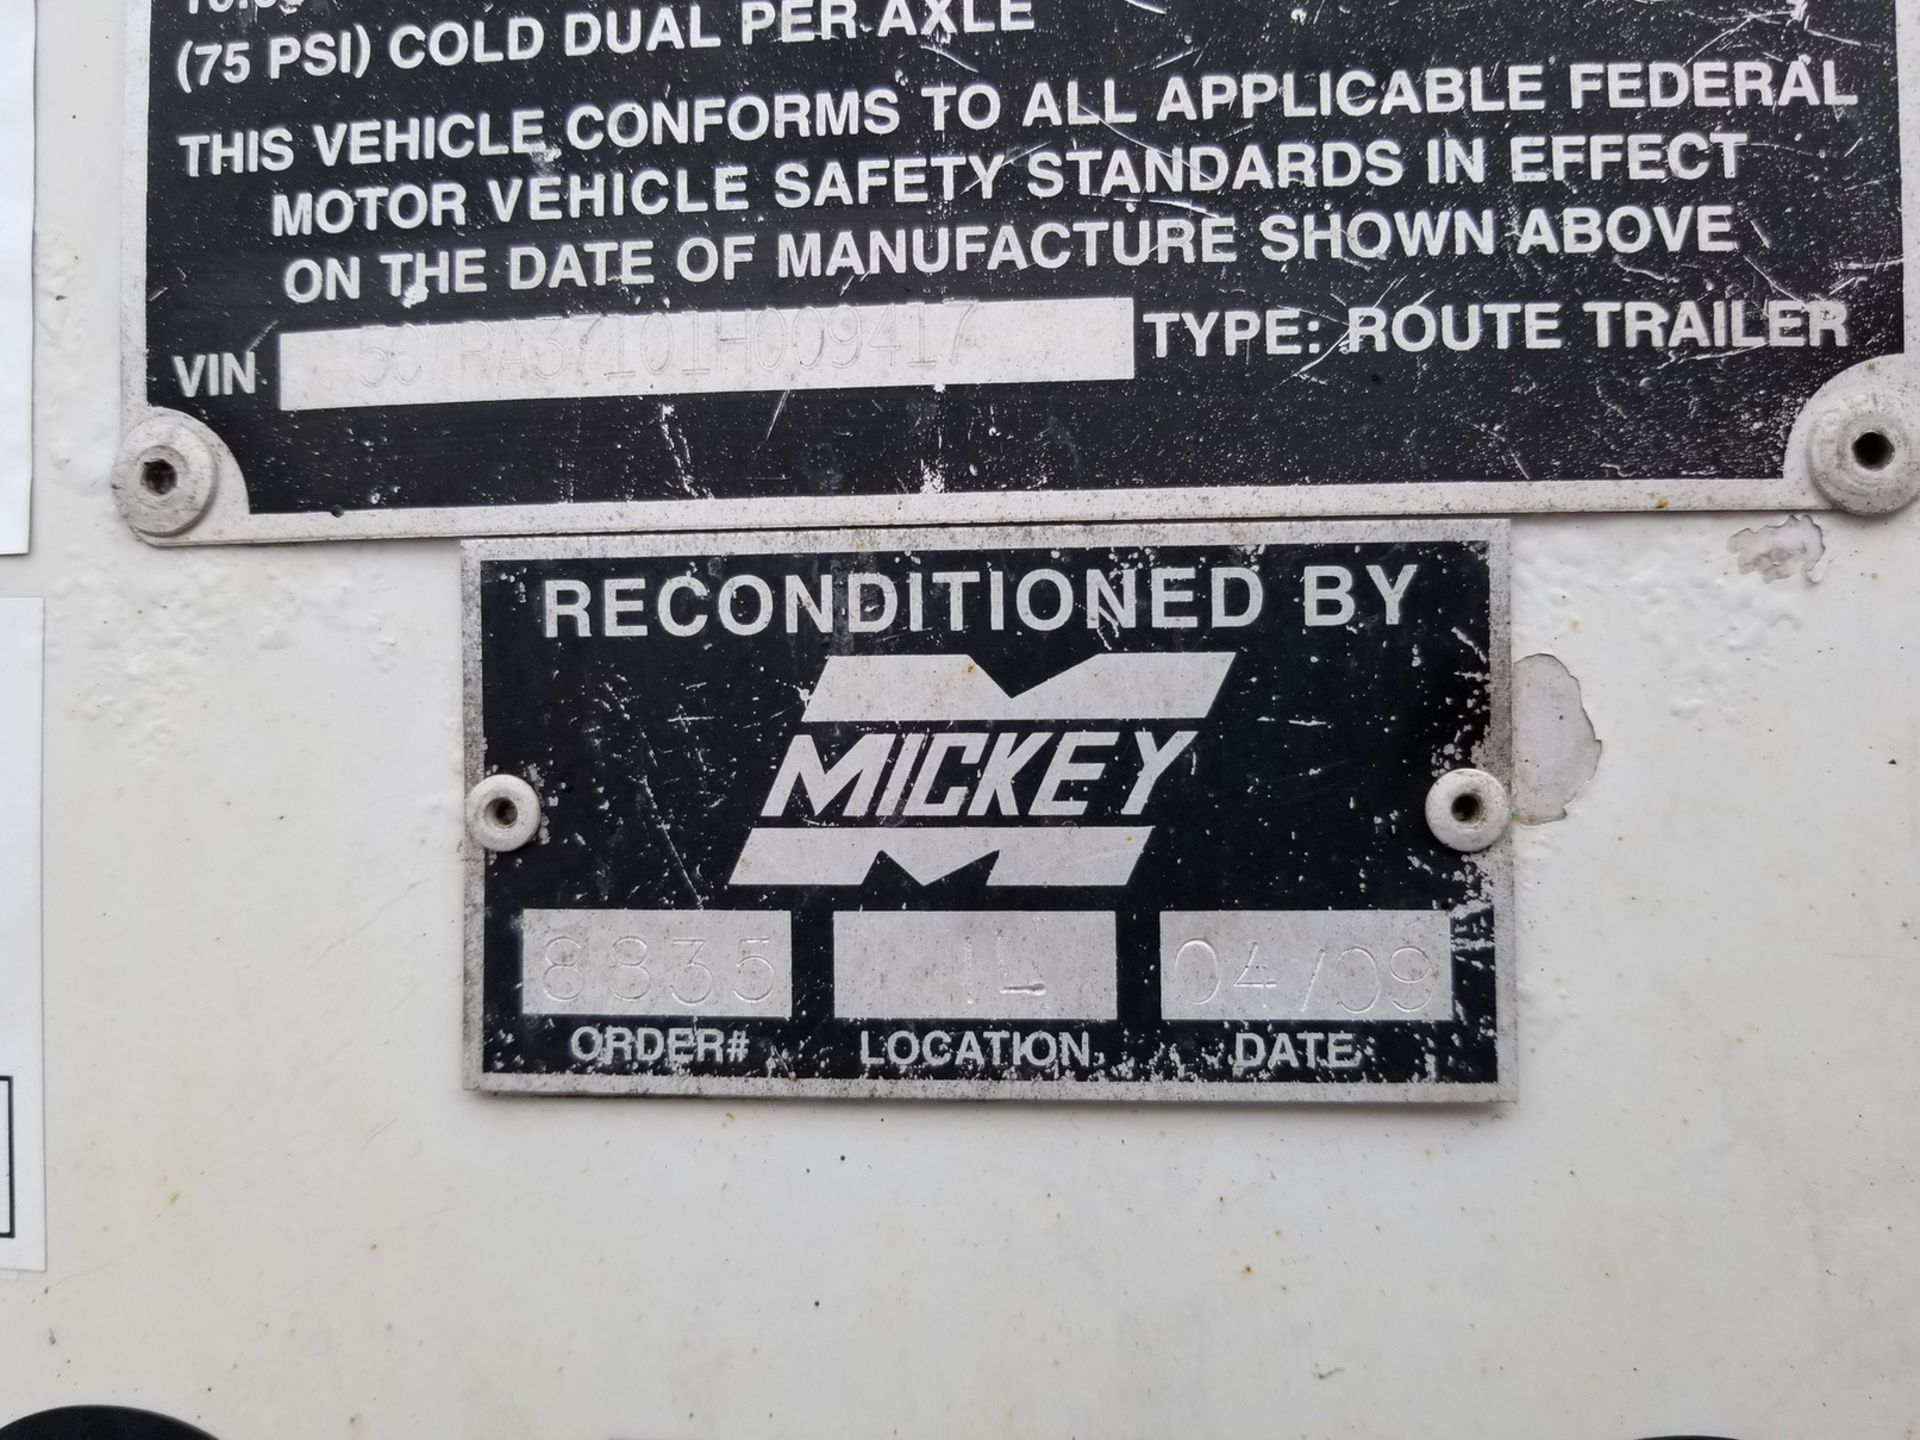 2001 Mickey 16 Bay Single Axle Beverage Delivery Trailerr, VIN# 5CWRA37101H009417 - Image 20 of 21